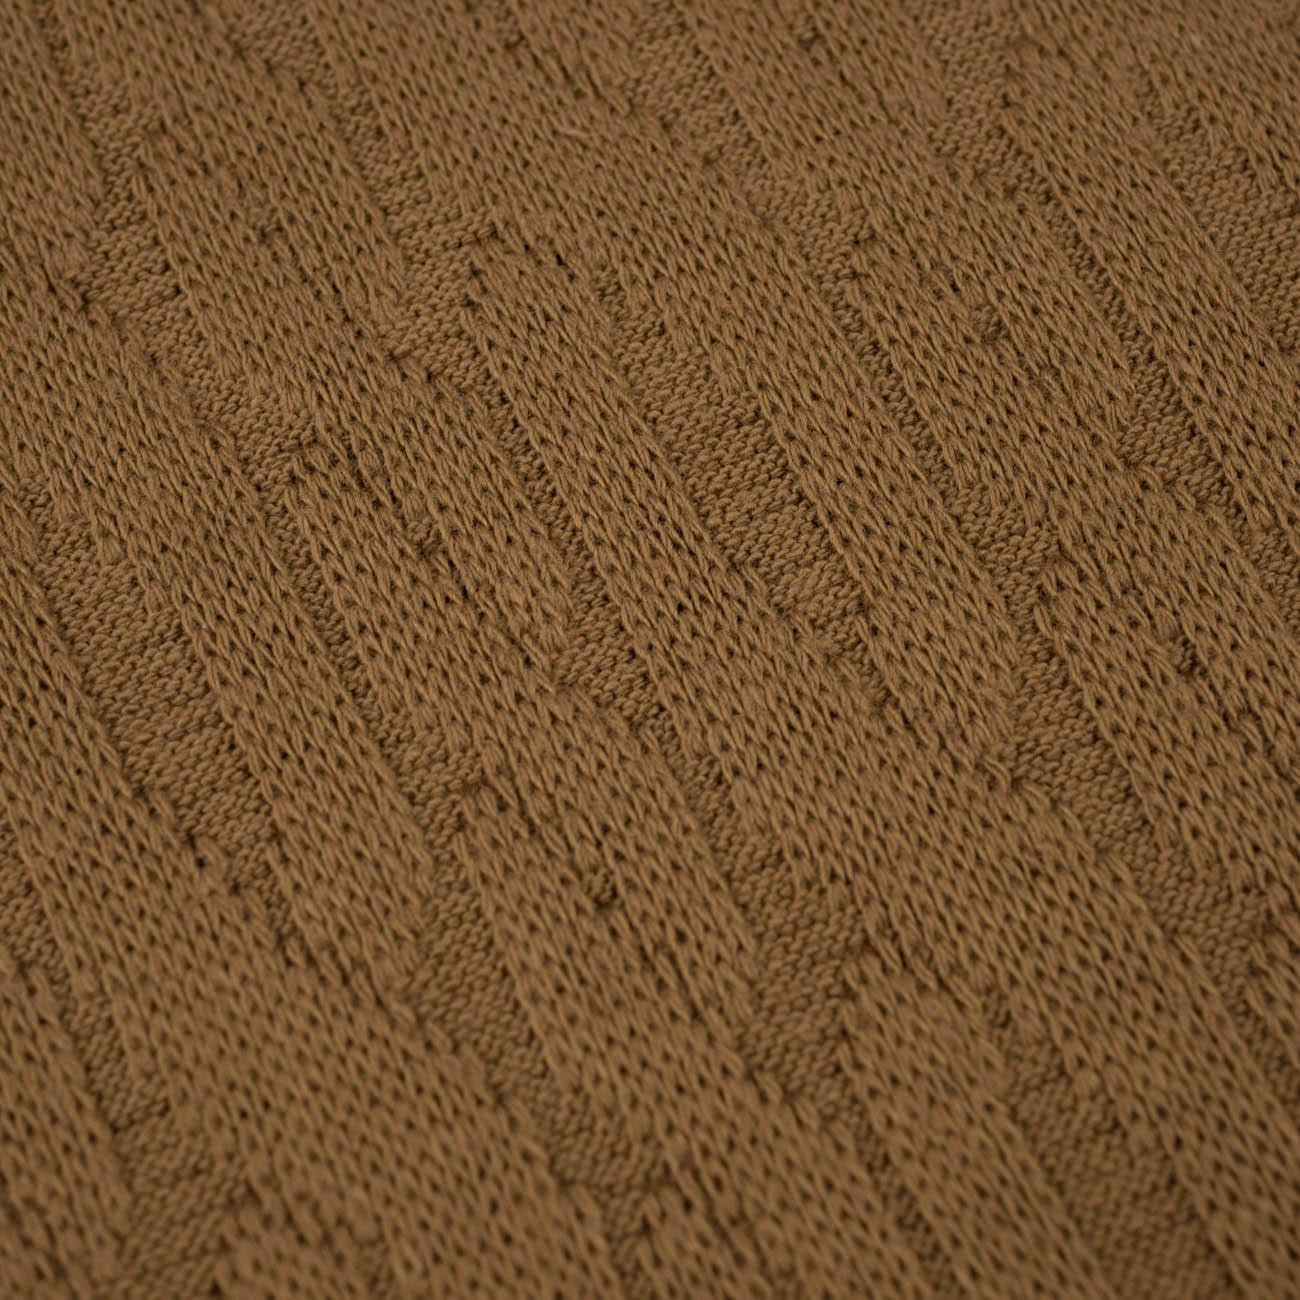 Coffee with milk - Sweater knit fabric 420g - Braid